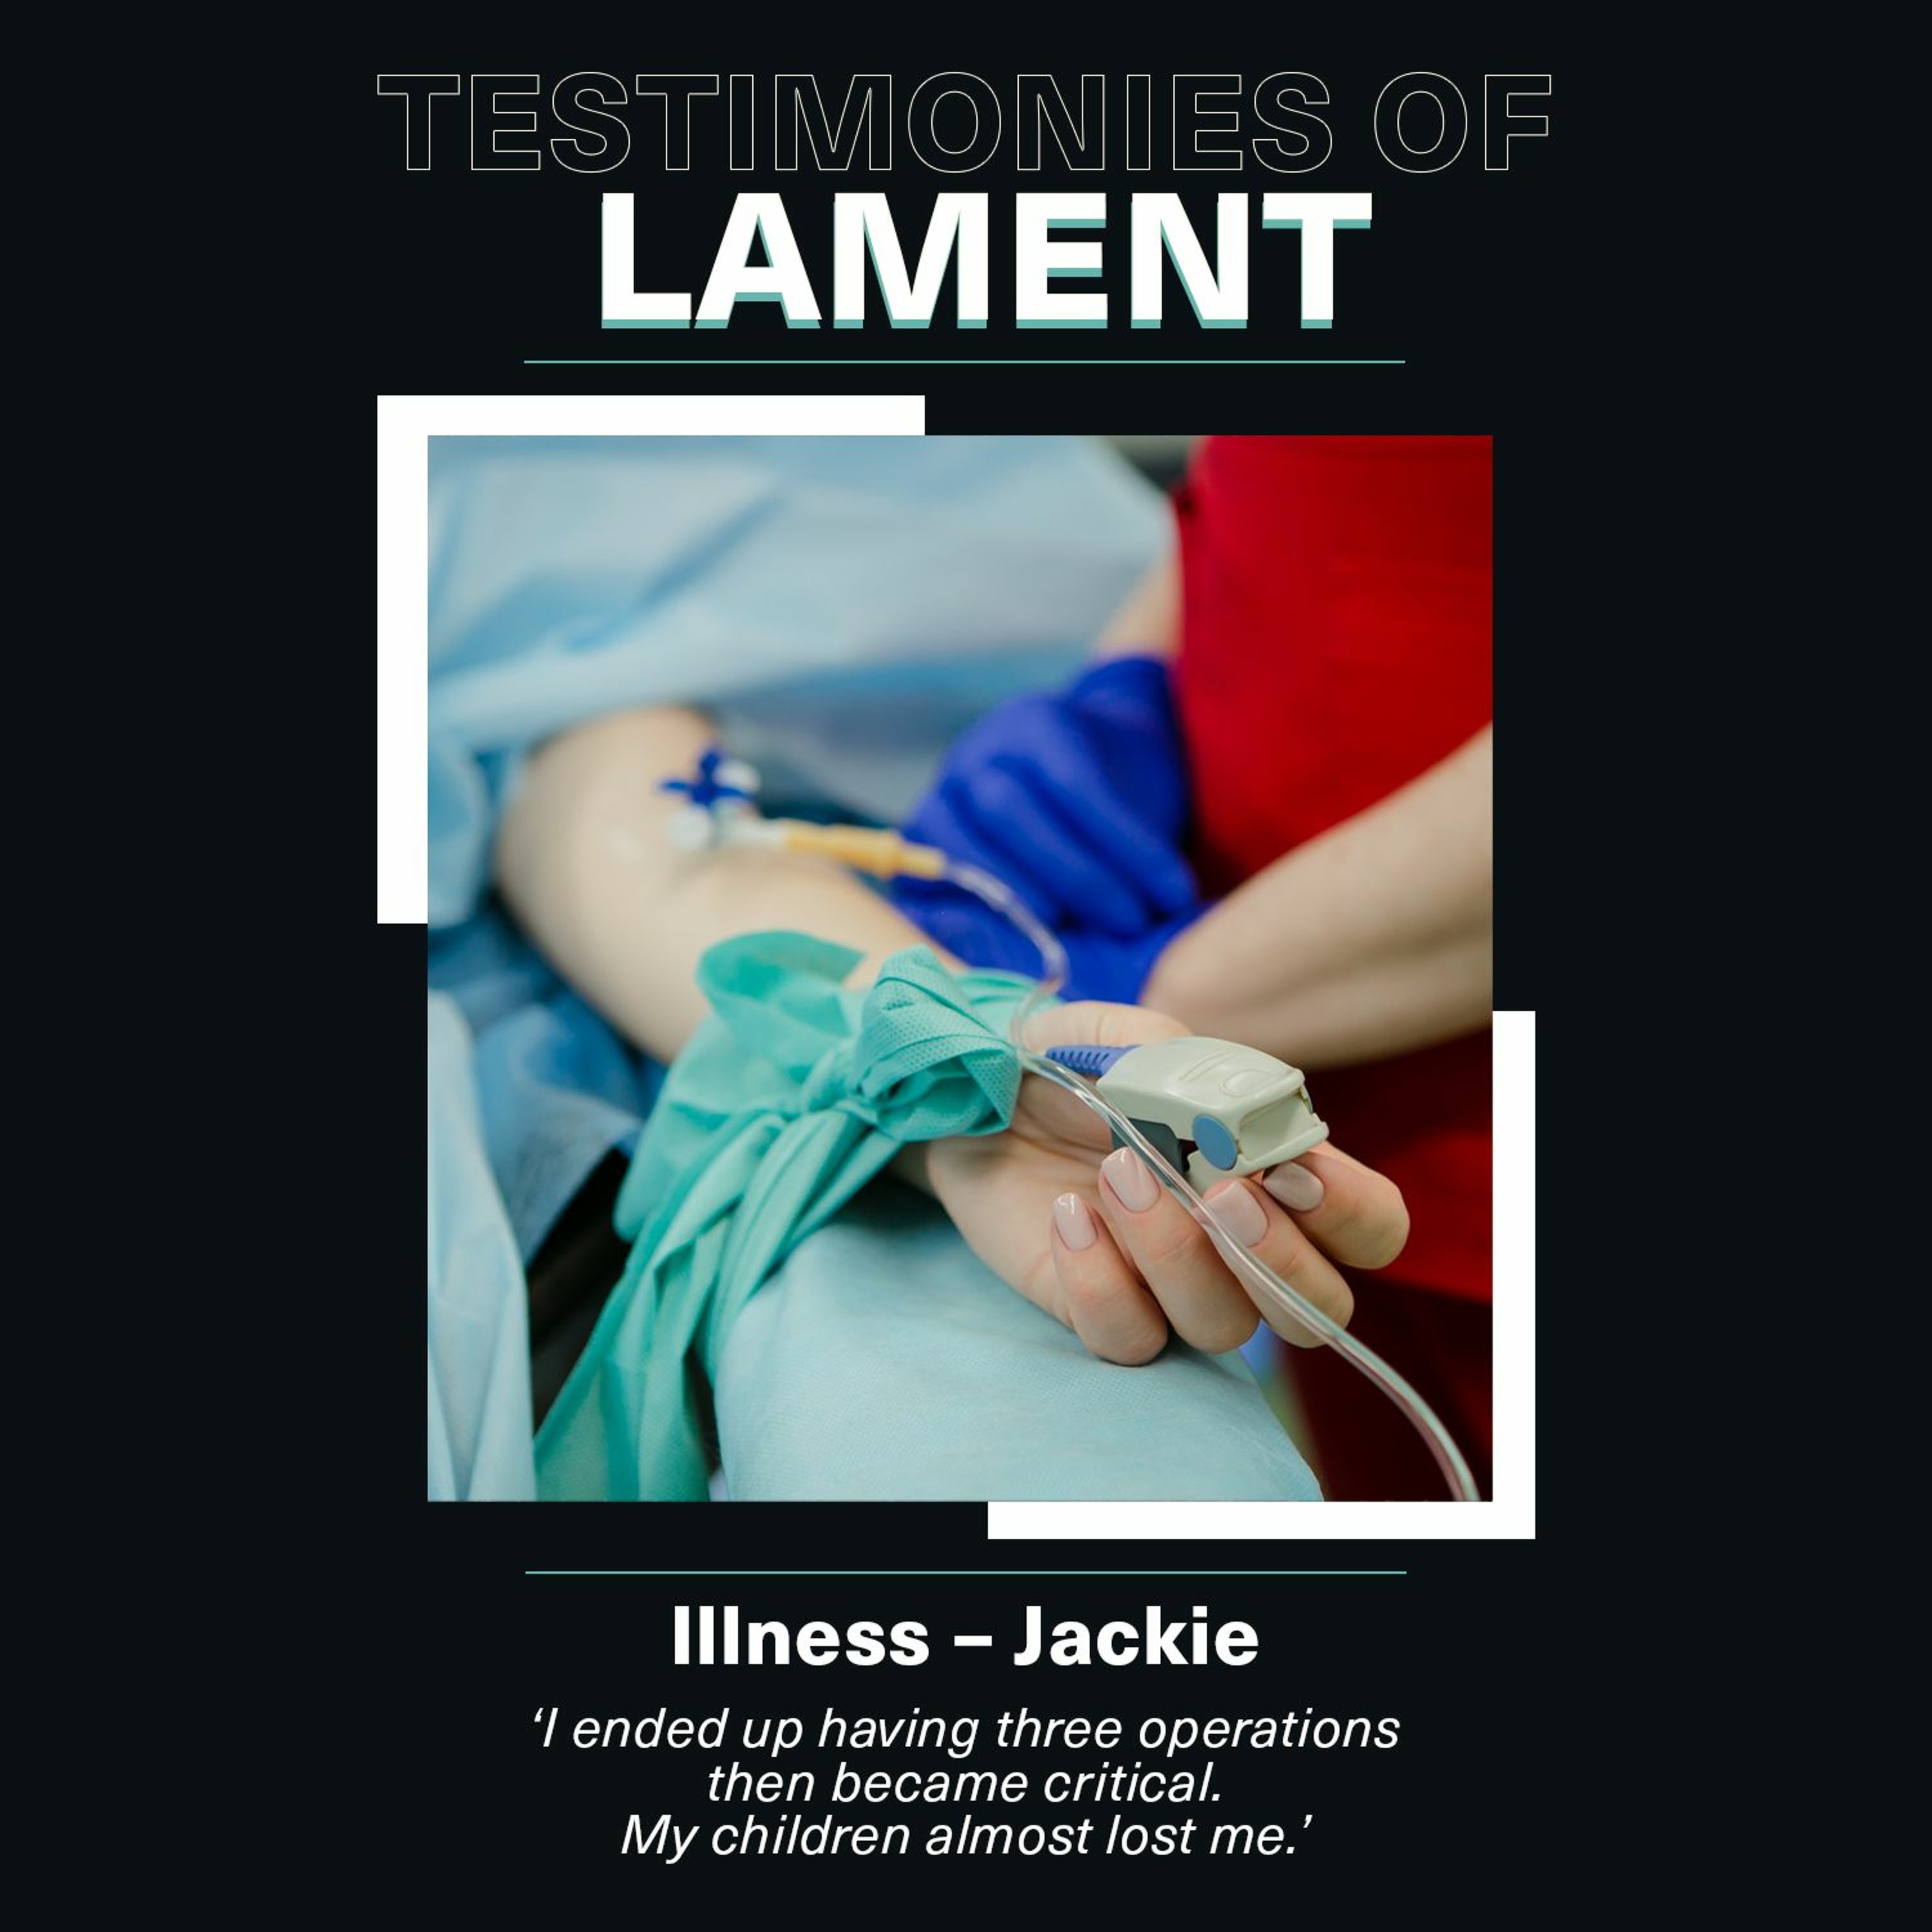 Testimonies of lament - Illness - Jackie